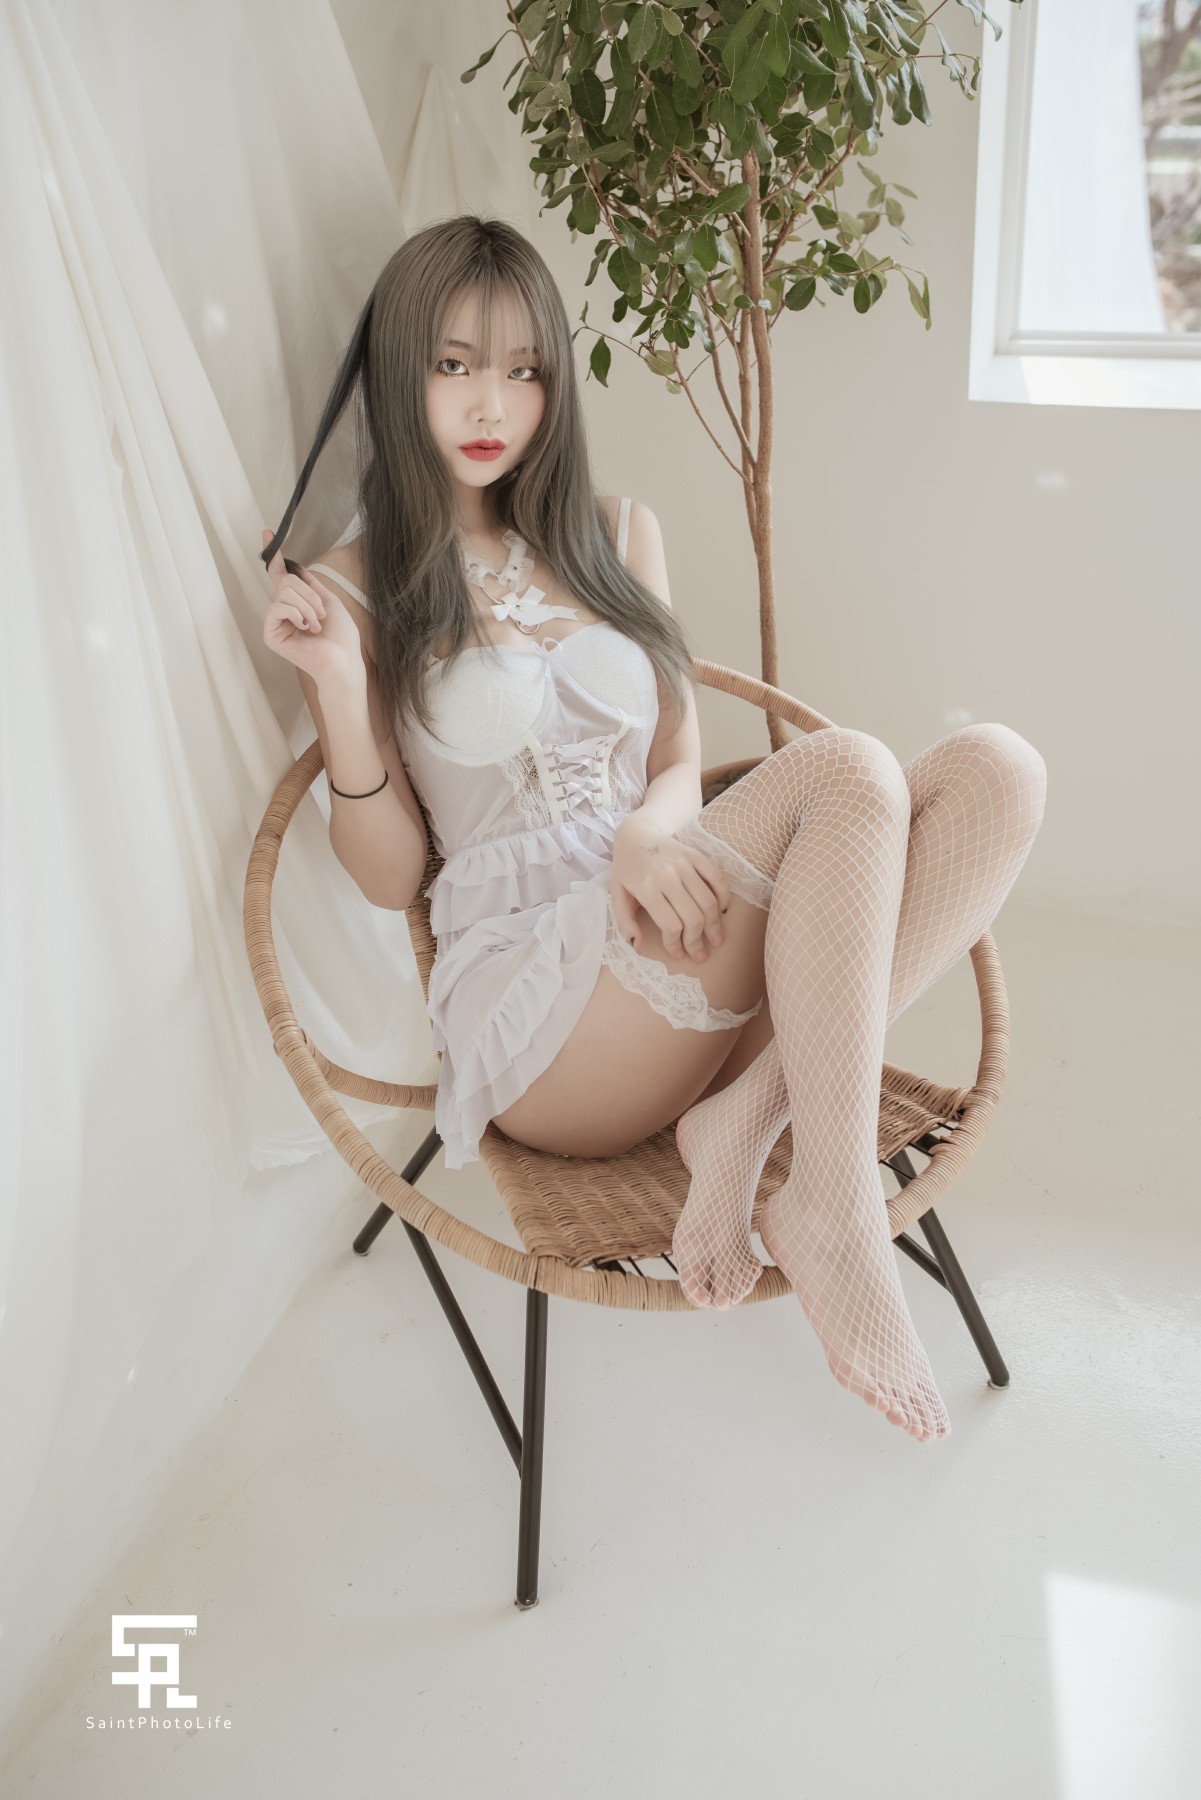 [SaintPhotoLife] Yuna - Growing Up 第1张